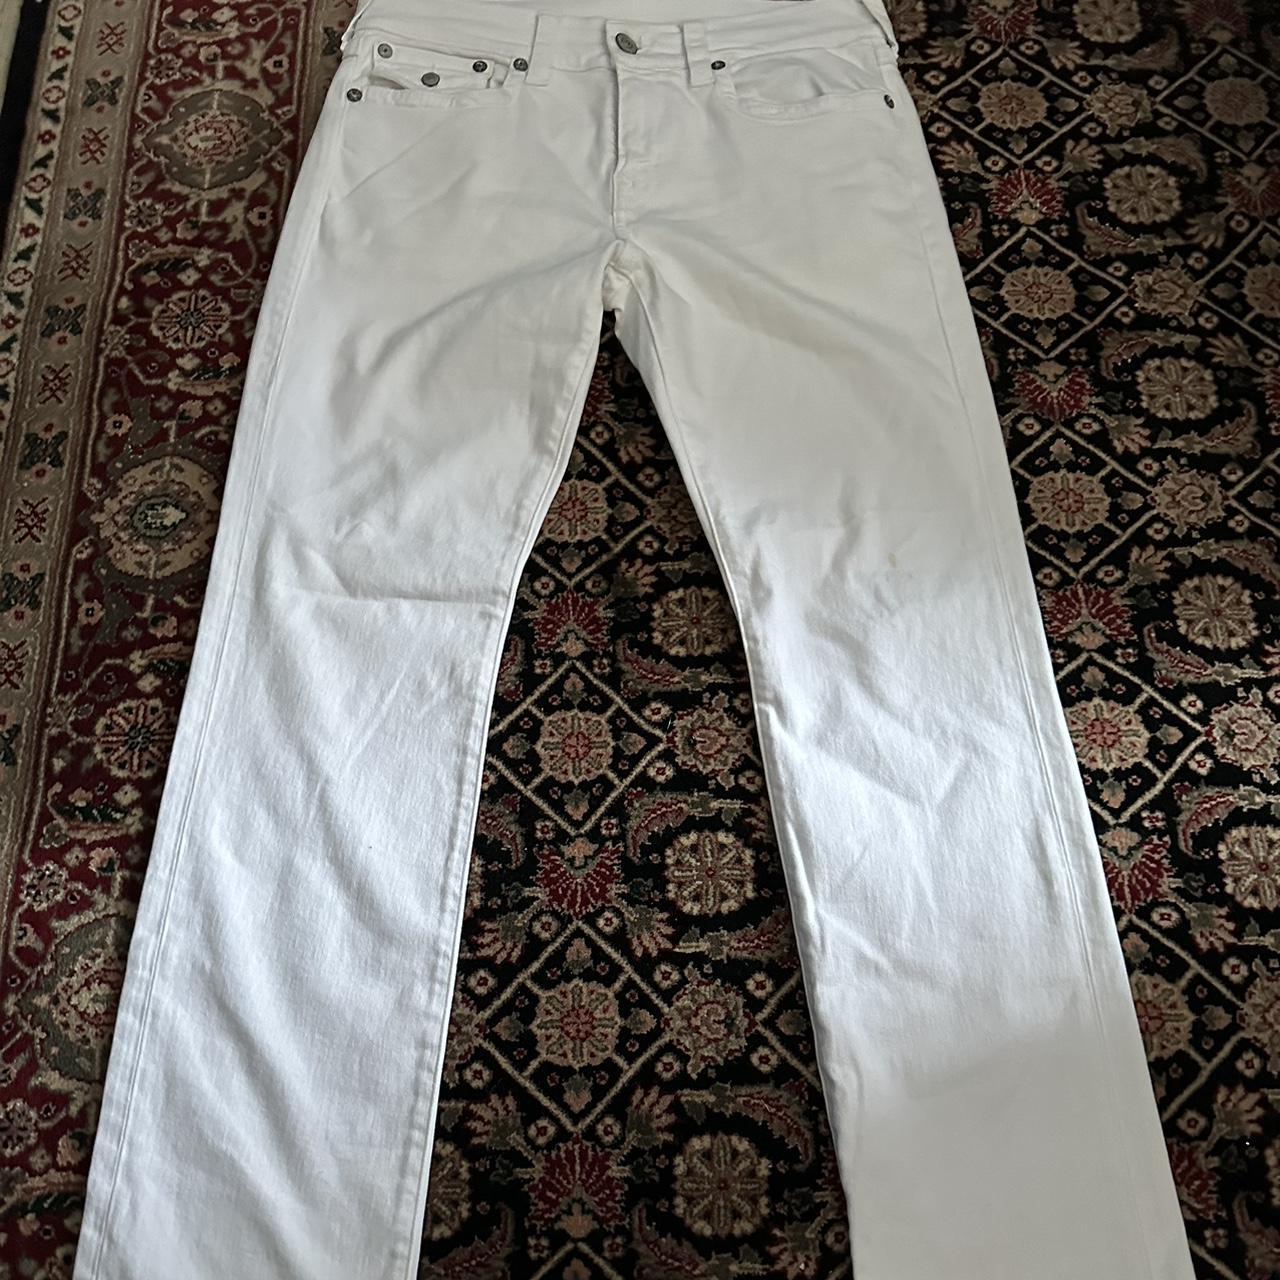 White true religion jeans 31x32 - Depop